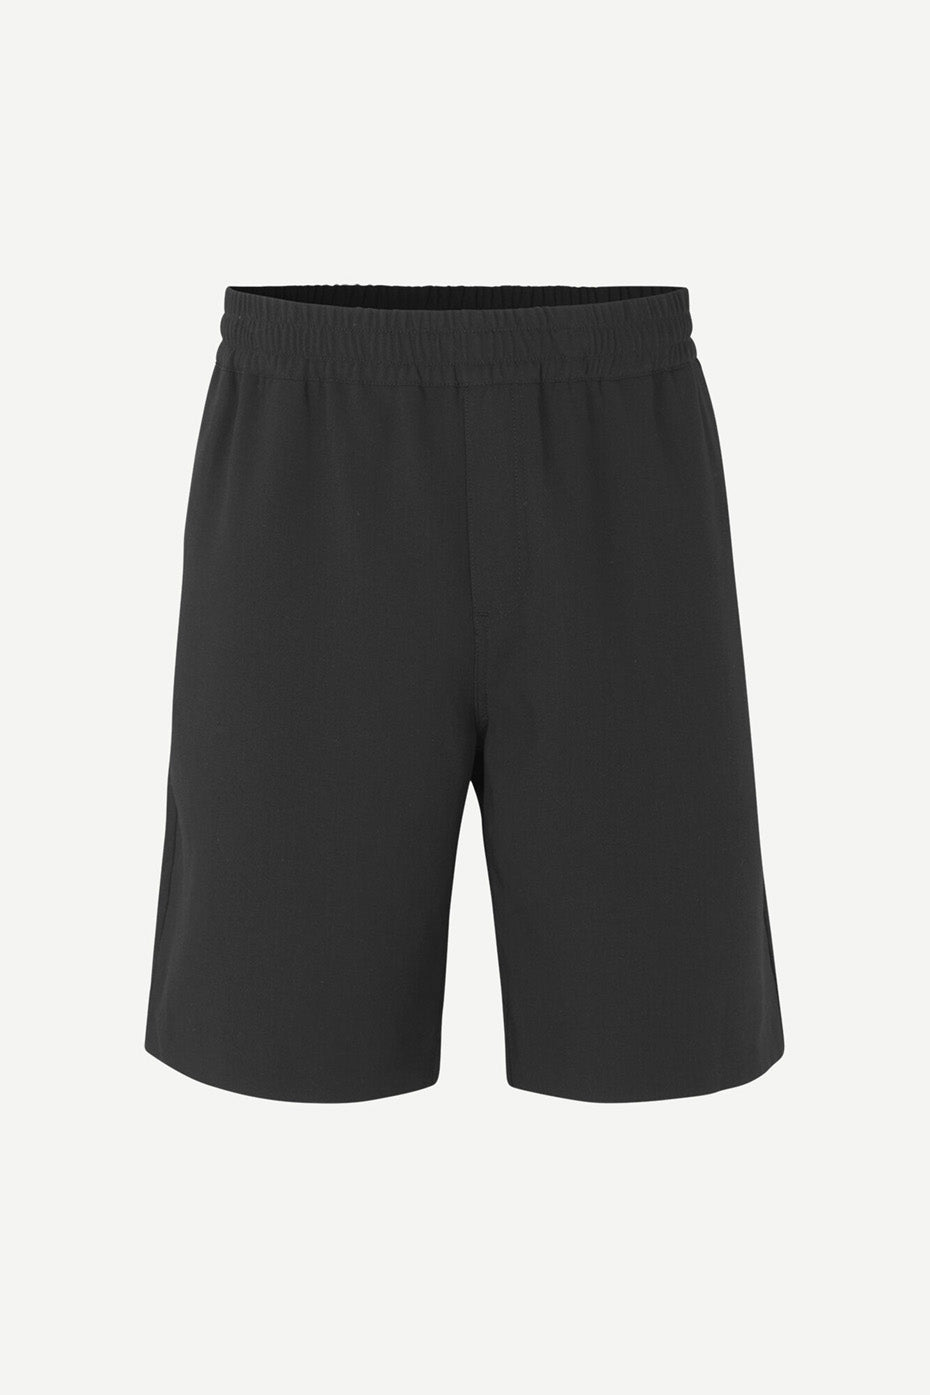 Black Smith Shorts